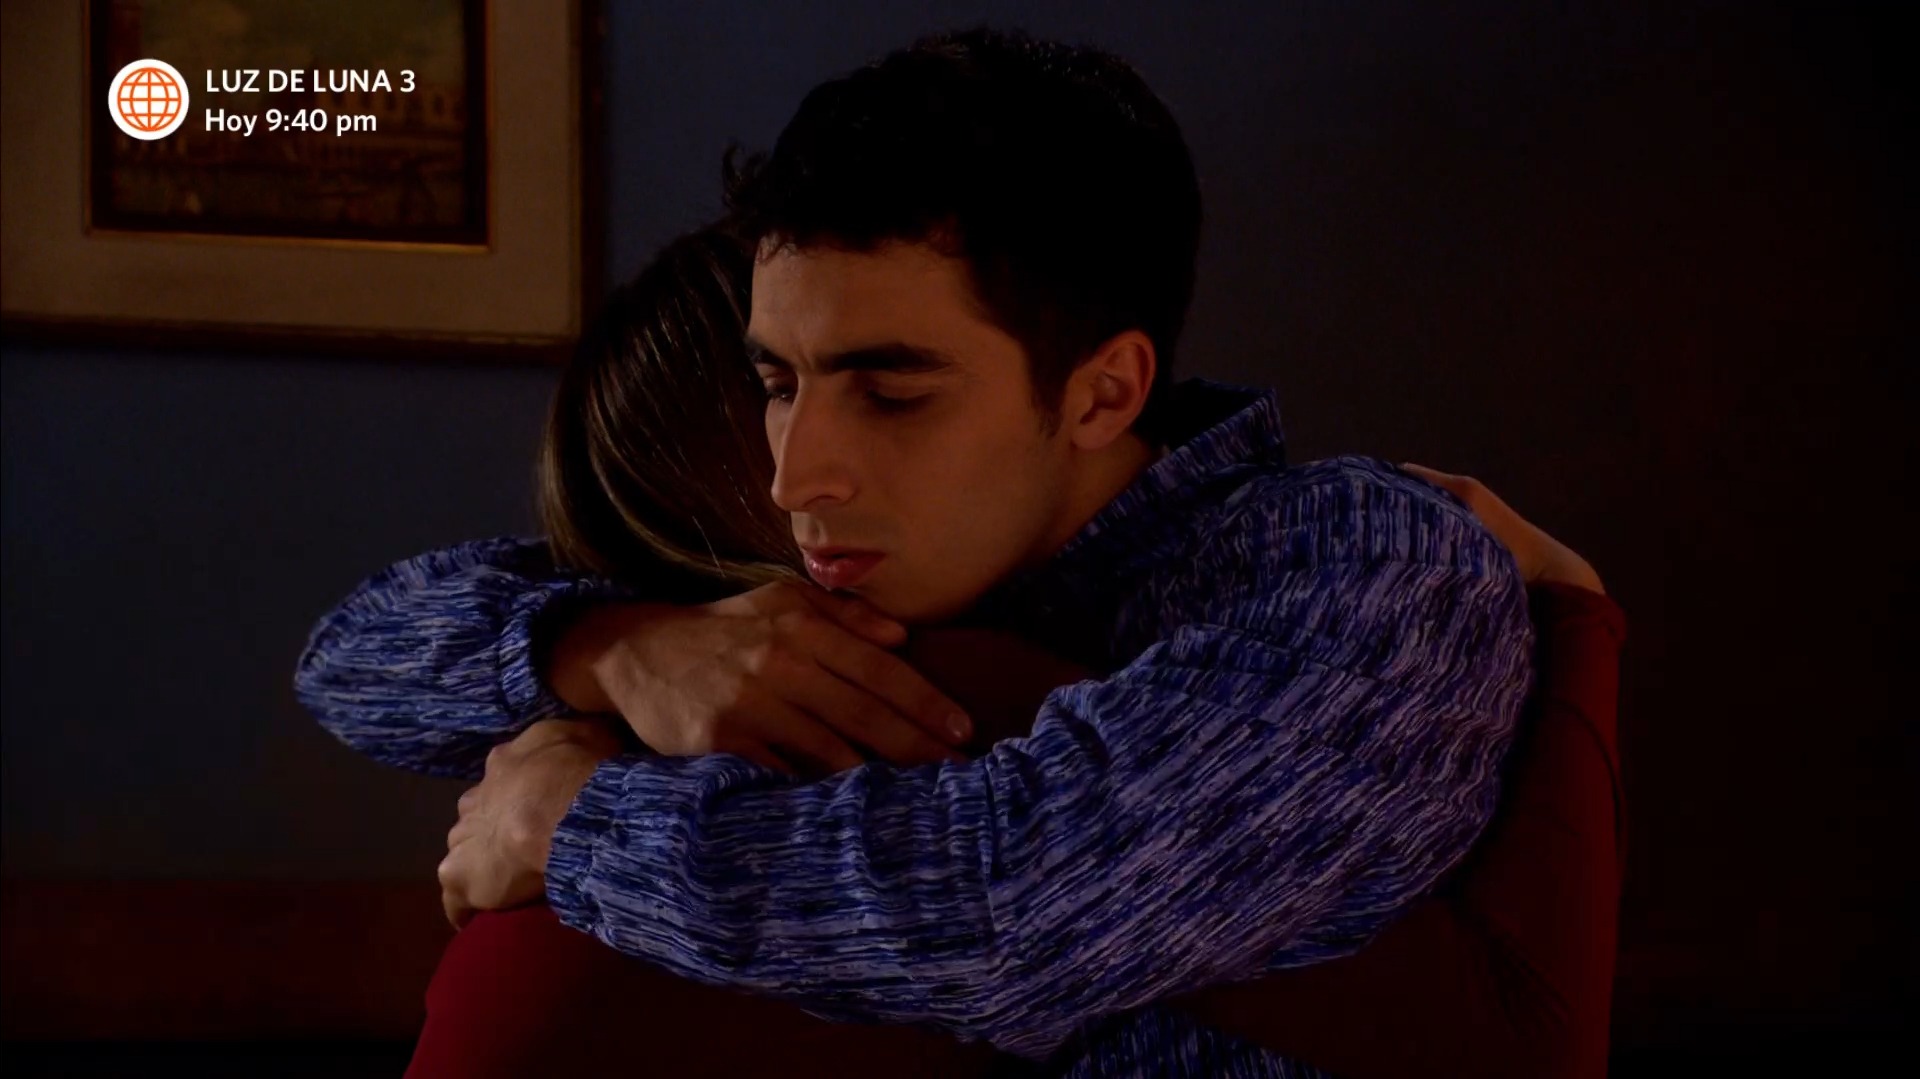 Jimmy consolando a Laia en su casa. Fuente: AméricaTV